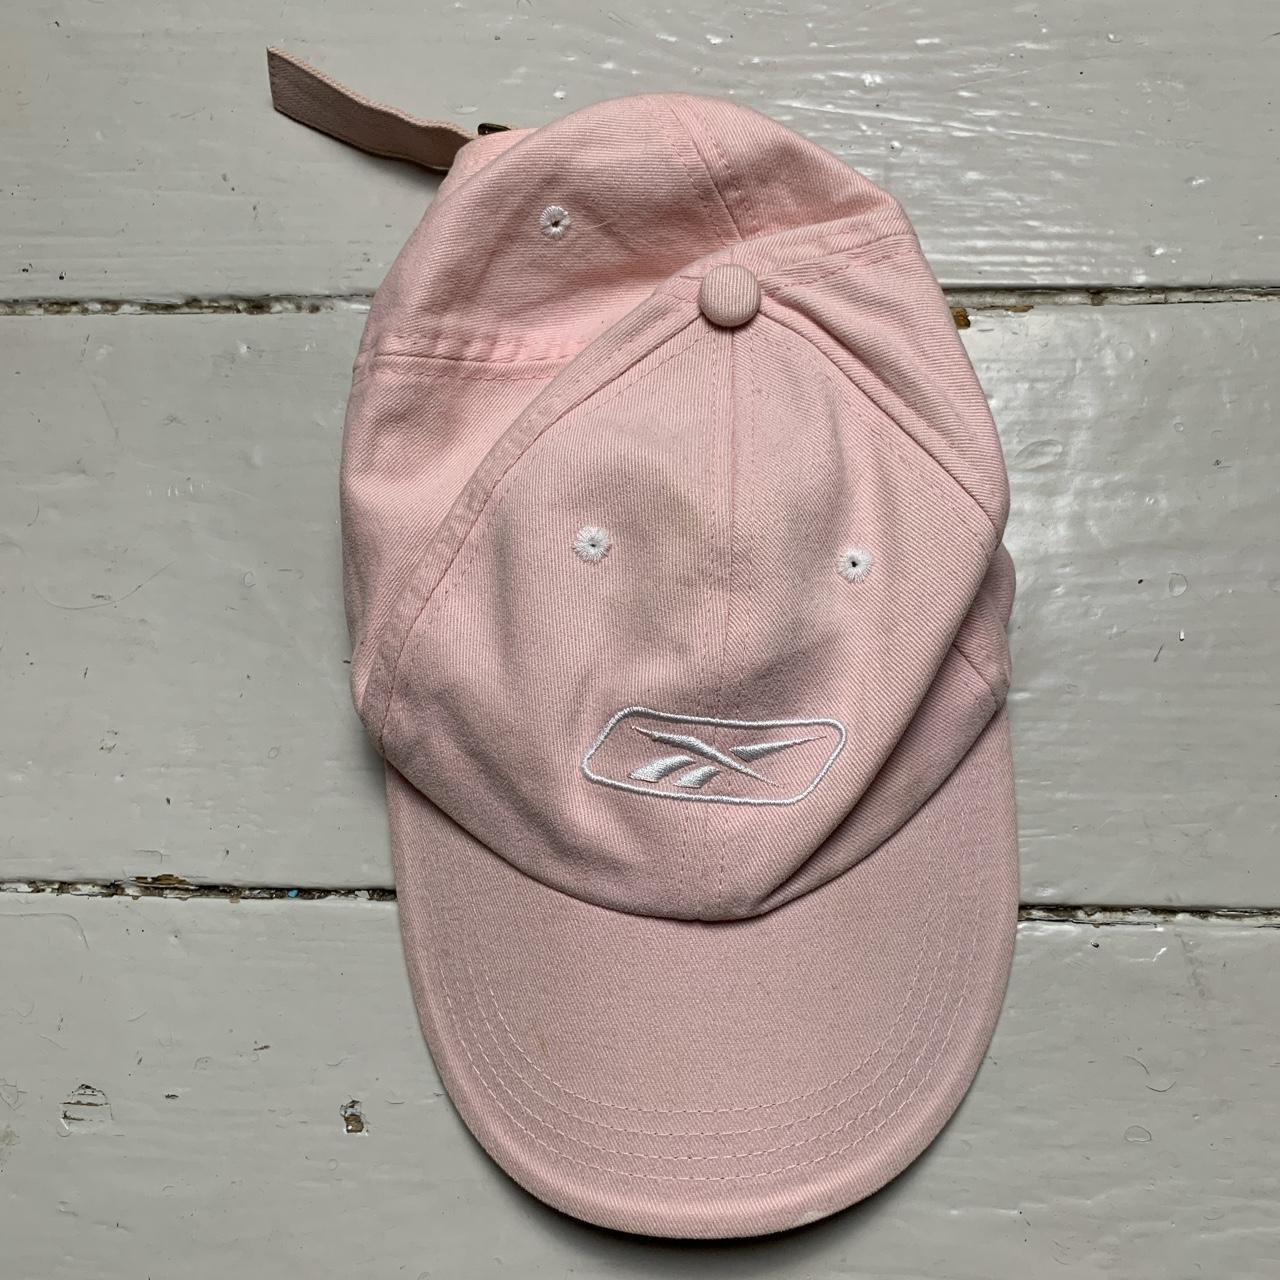 Reebok Pink and White Cap